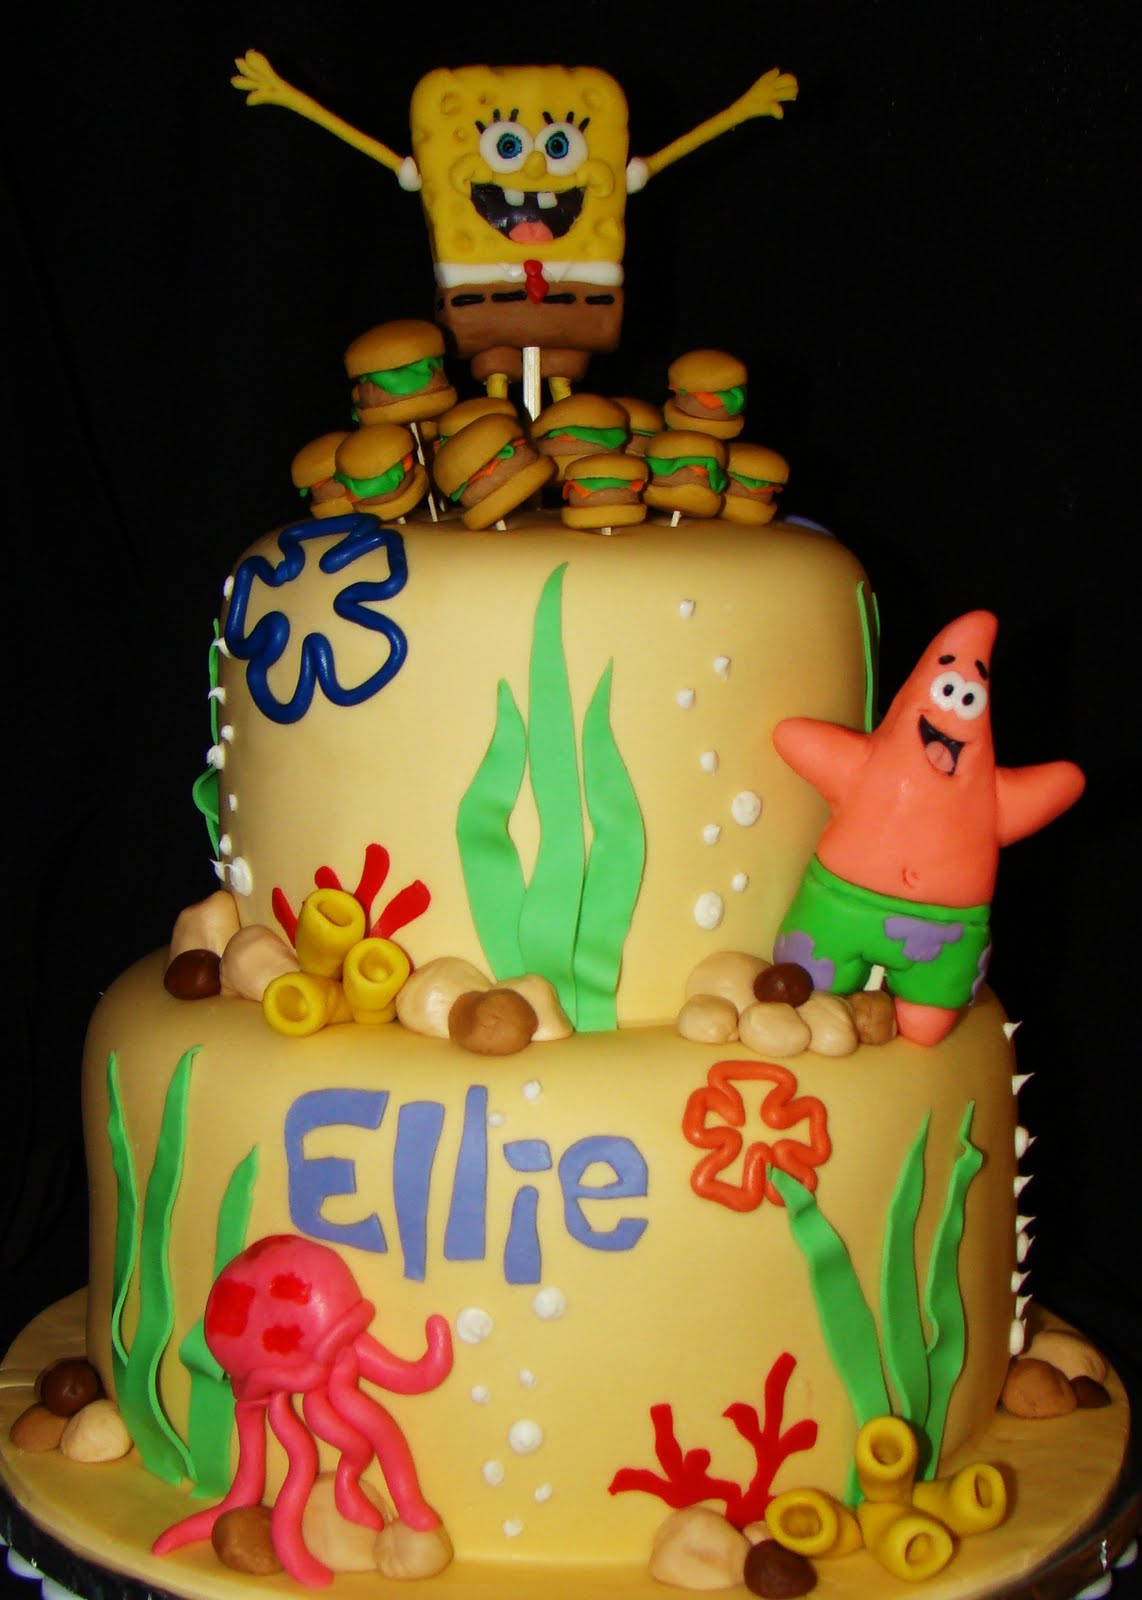 Best ideas about Spongebob Birthday Cake
. Save or Pin Spongebob Cakes – Decoration Ideas Now.